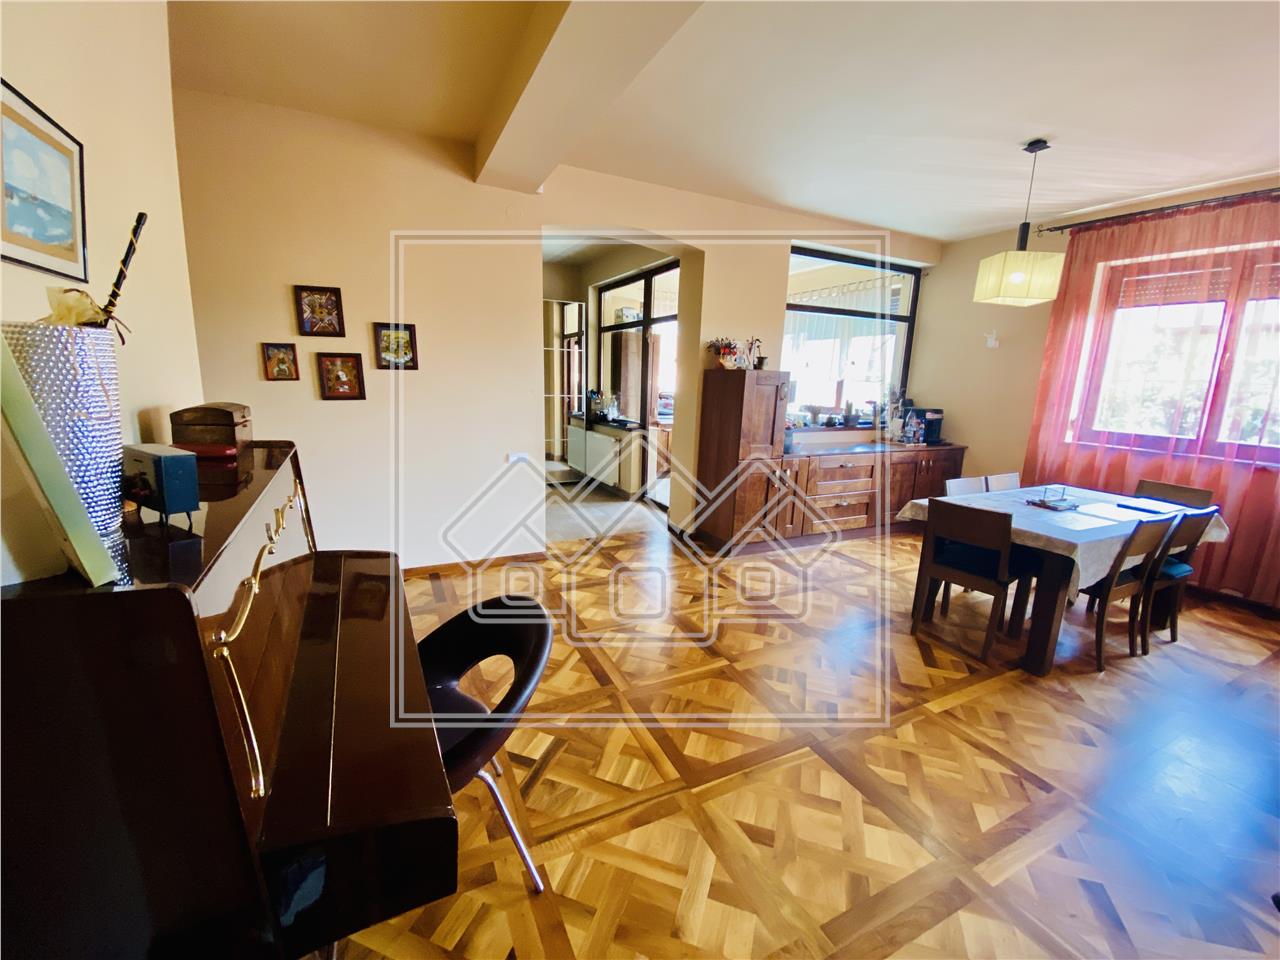 House for rent in Sibiu - 2 separate buildings - Trei Stejari Area